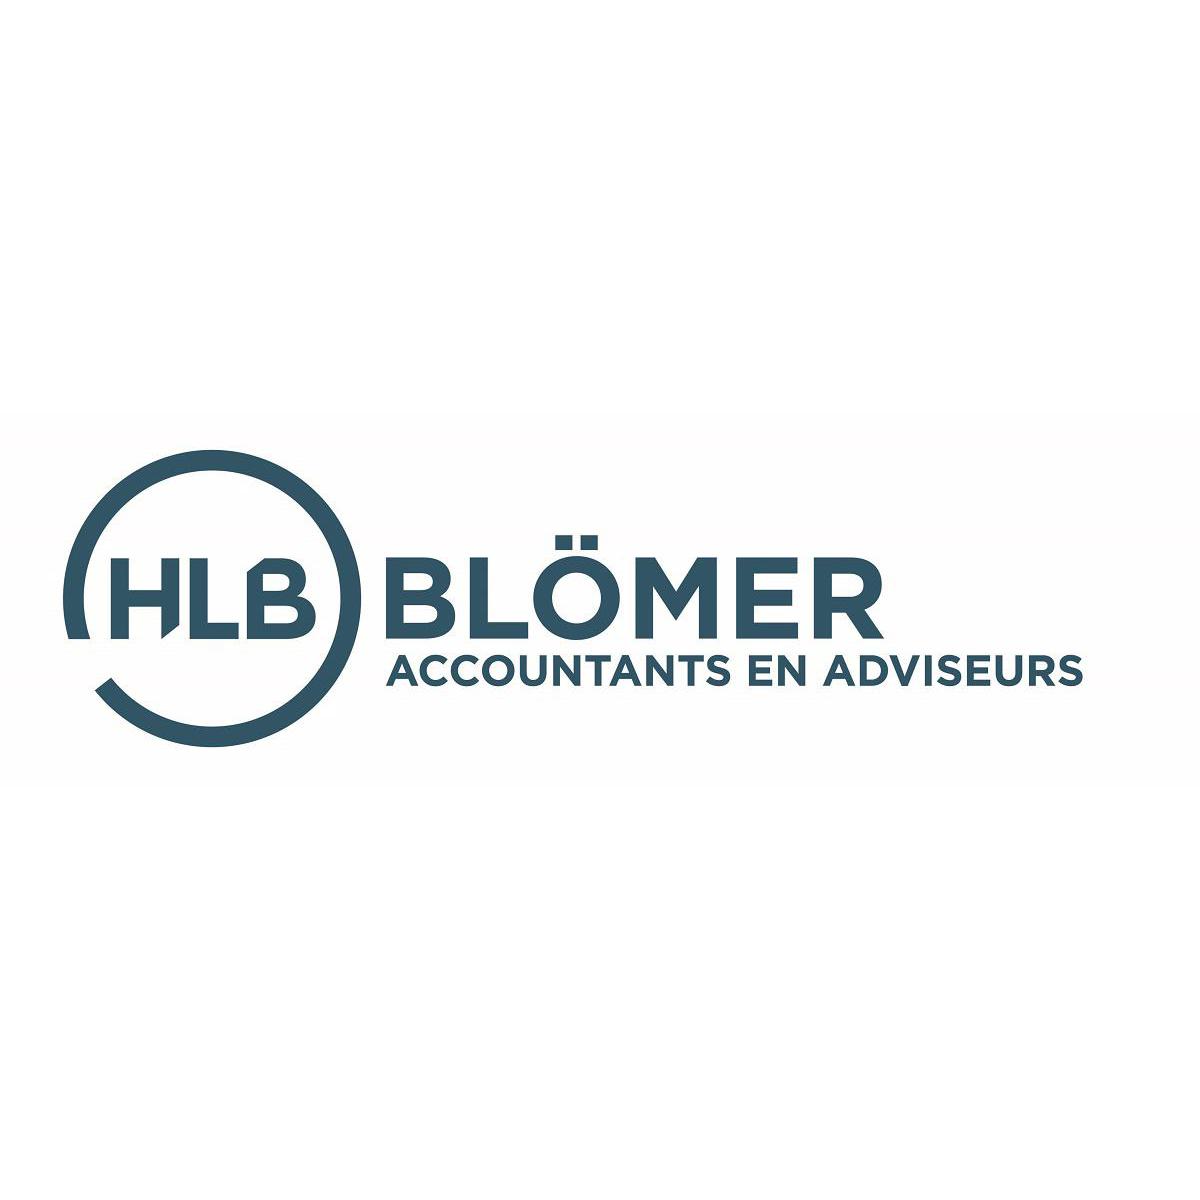 Blömer accountants en adviseurs Logo